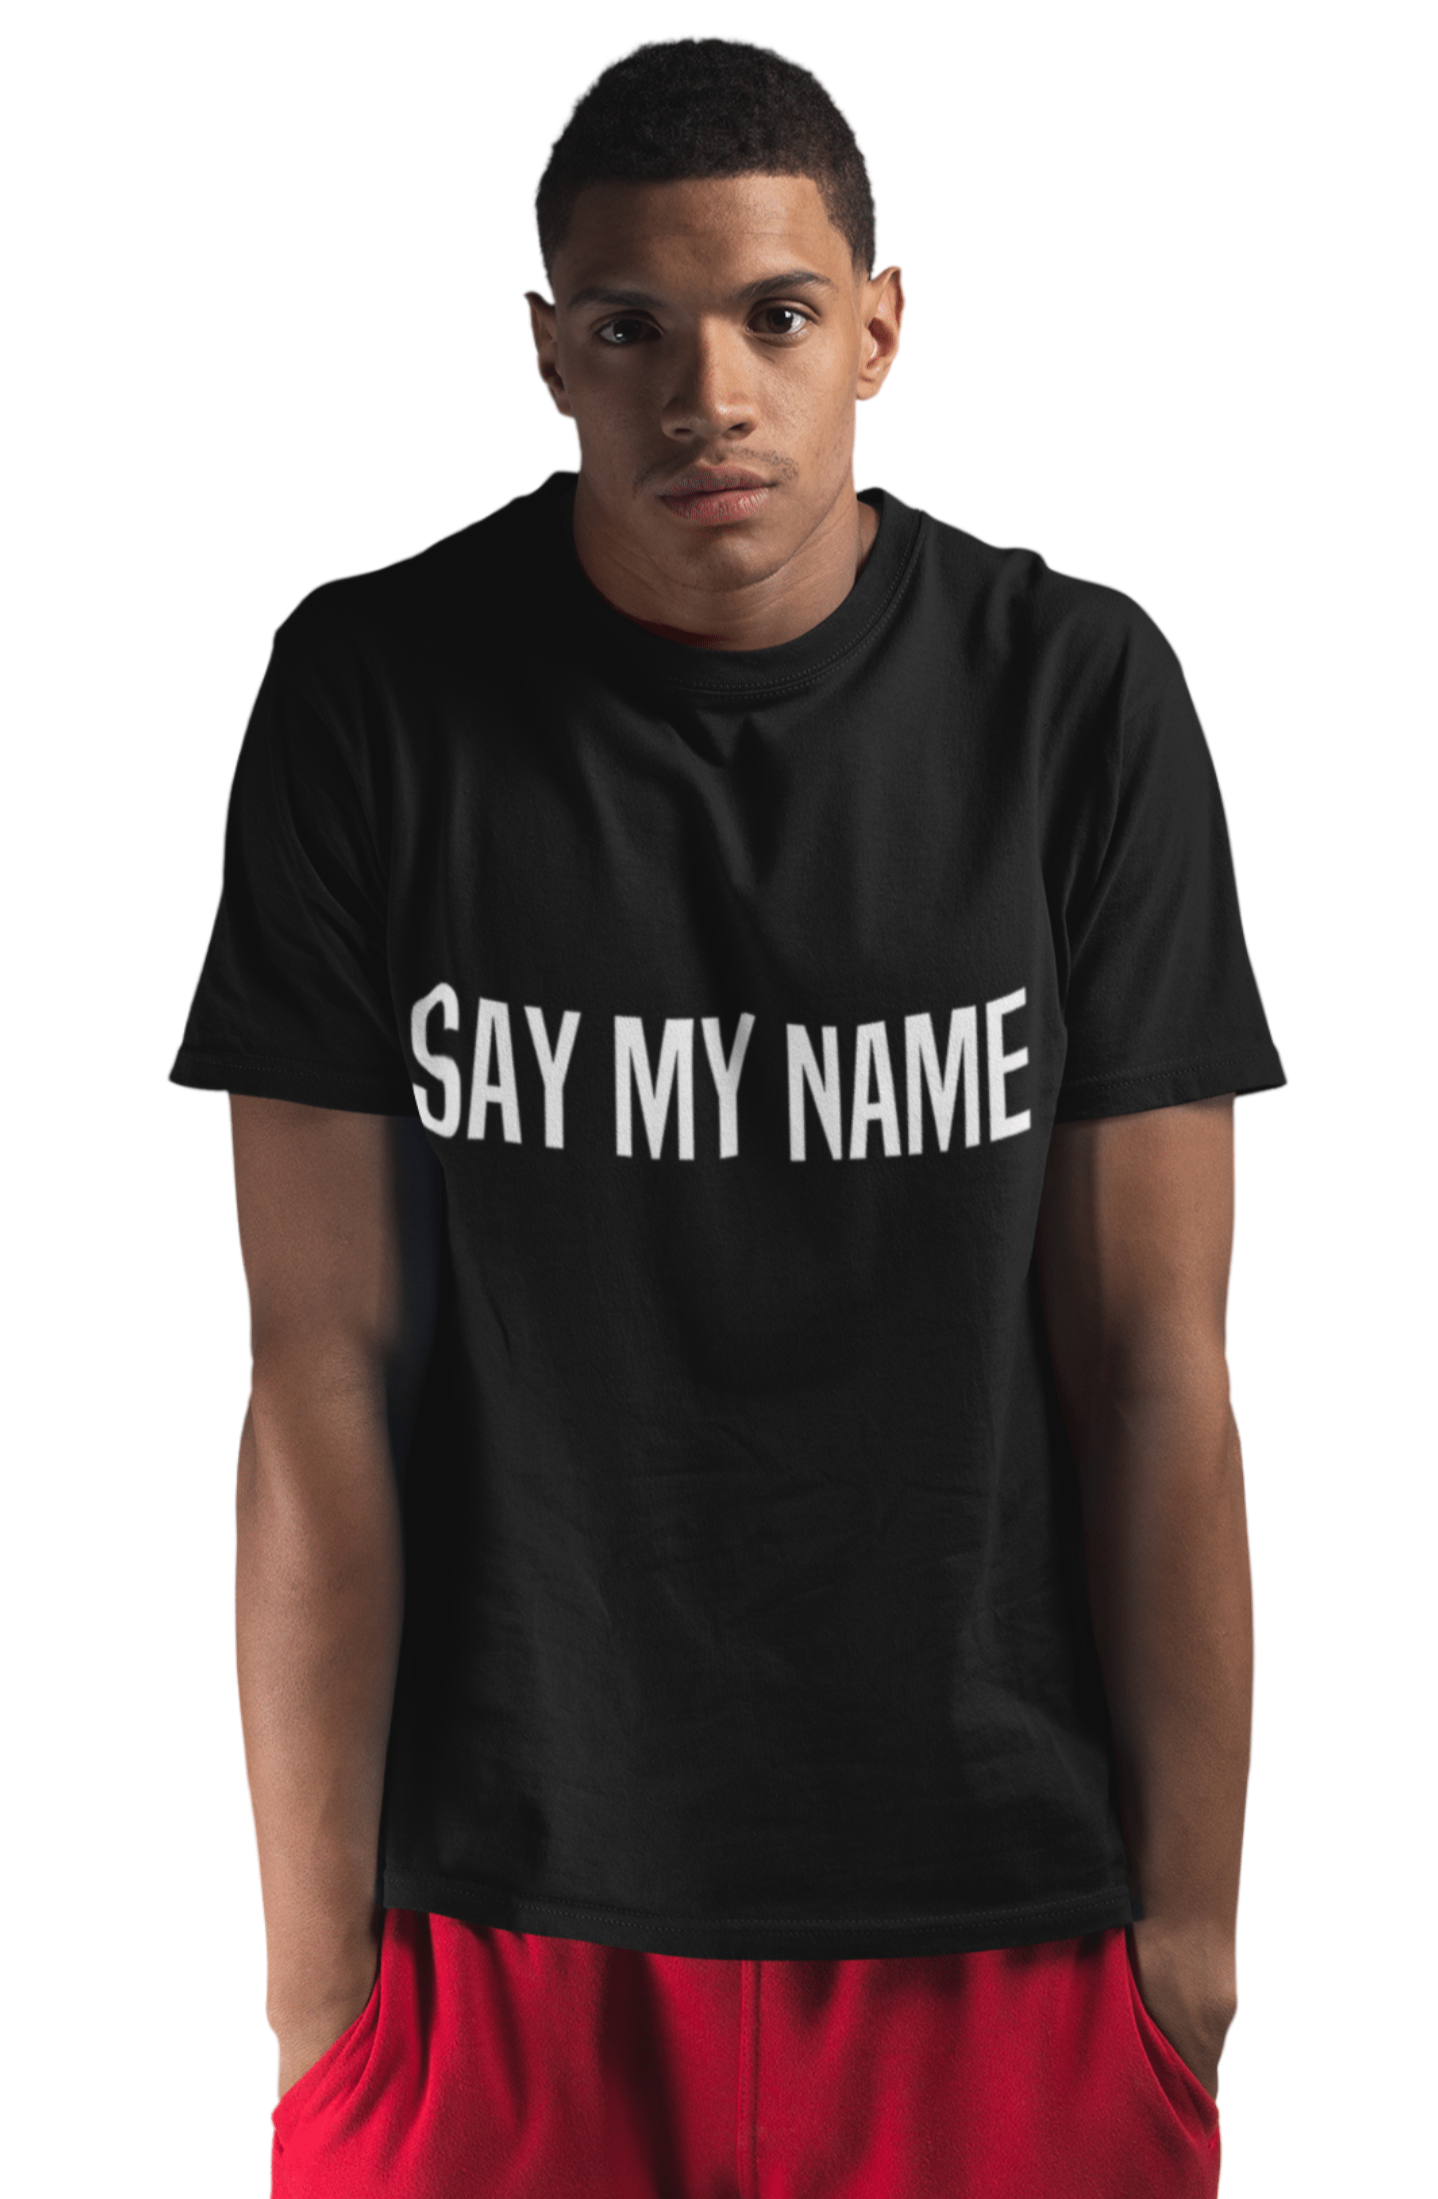 Men's CSG T-SHIRT "SAY MY NAME" 